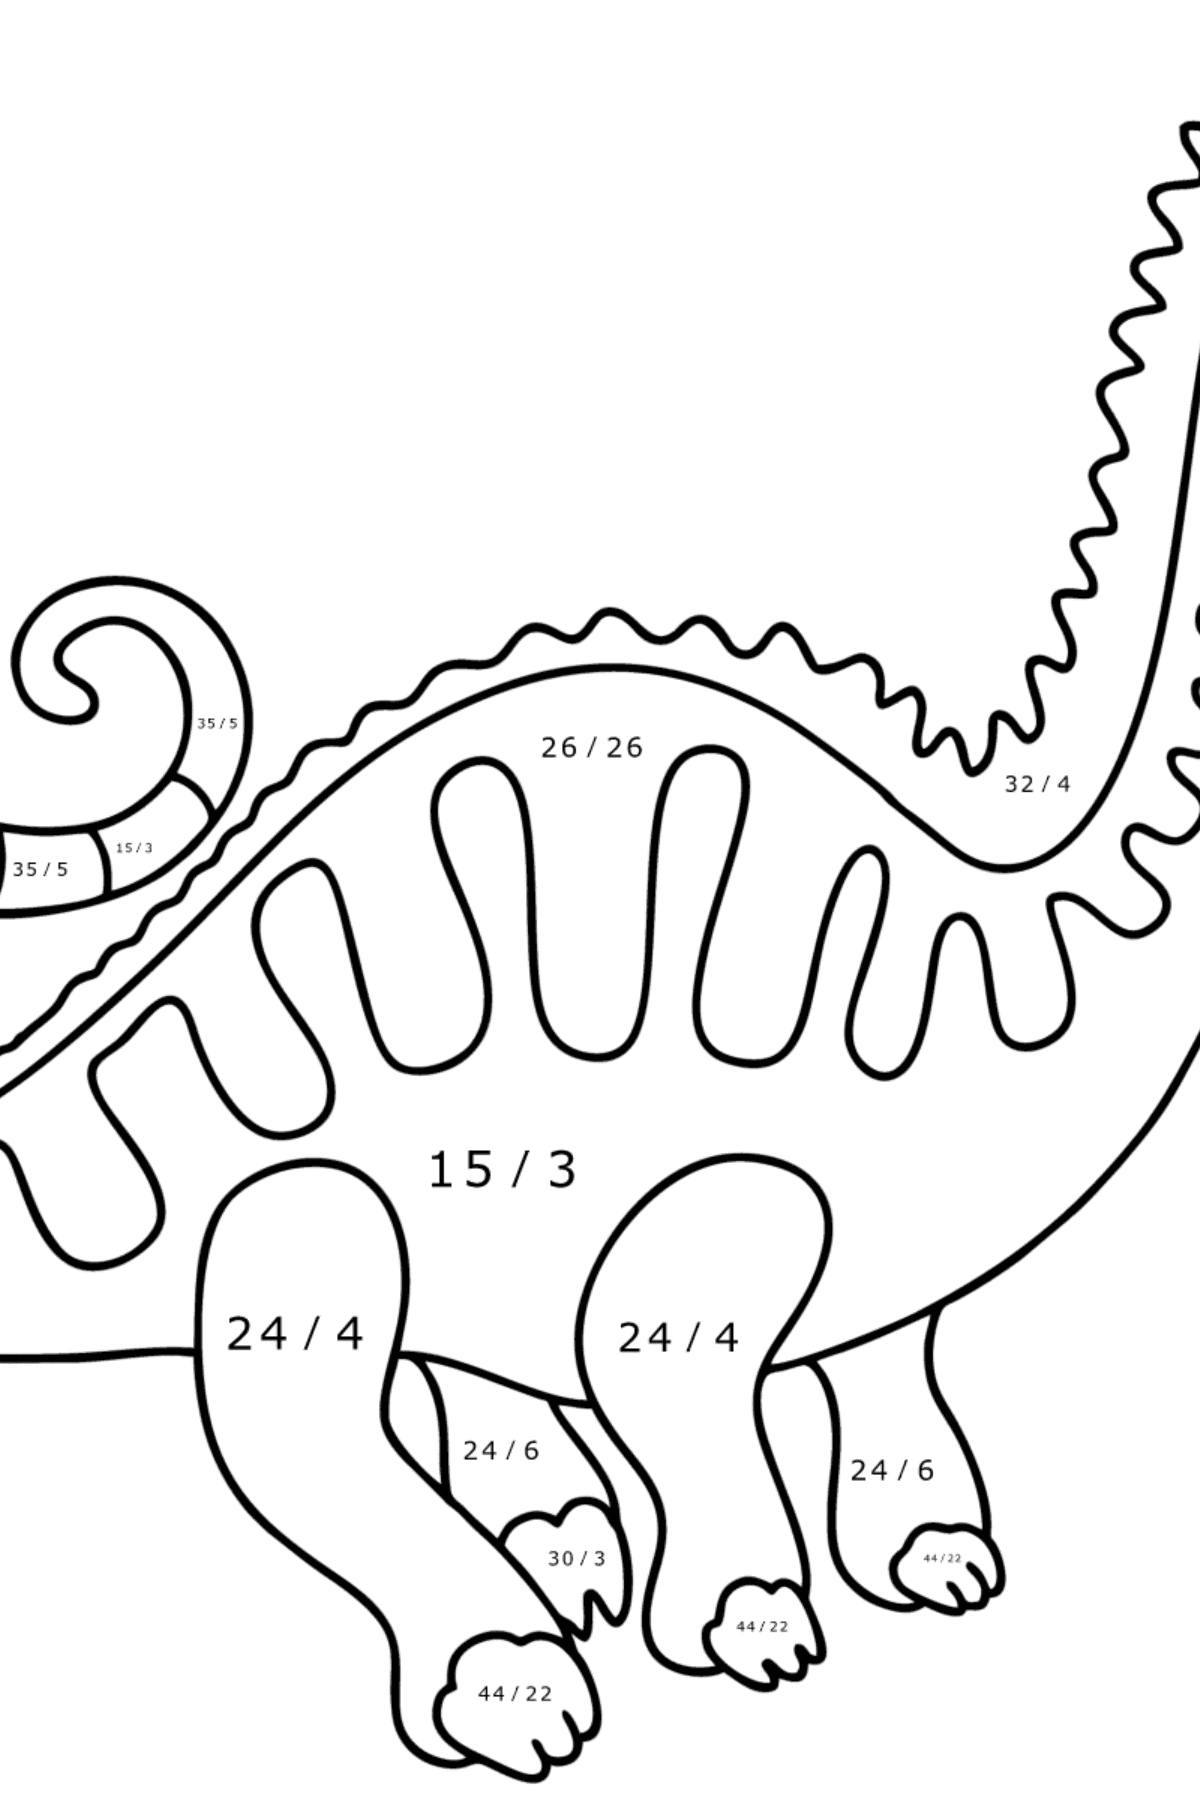 Apatosaurus coloring page - Math Coloring - Division for Kids